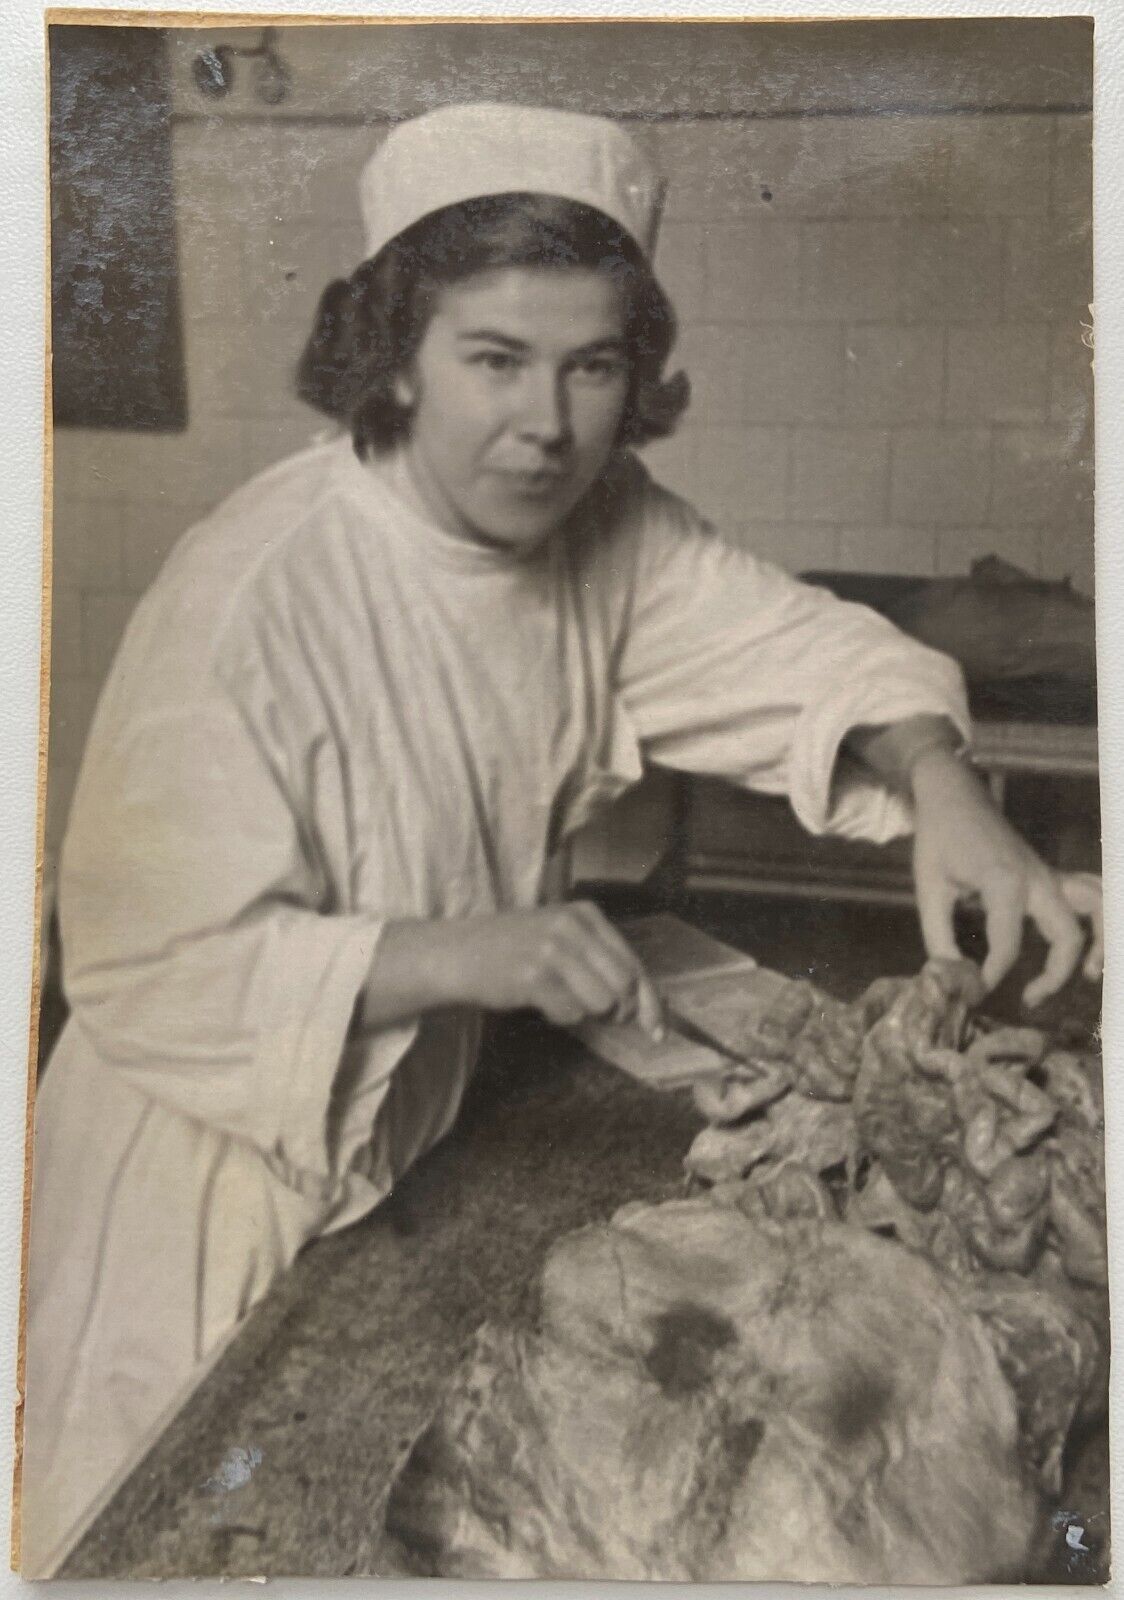 1930s Cadaver Surgical Autopsy Medical Students Dead Post Mortem Vintage Photo